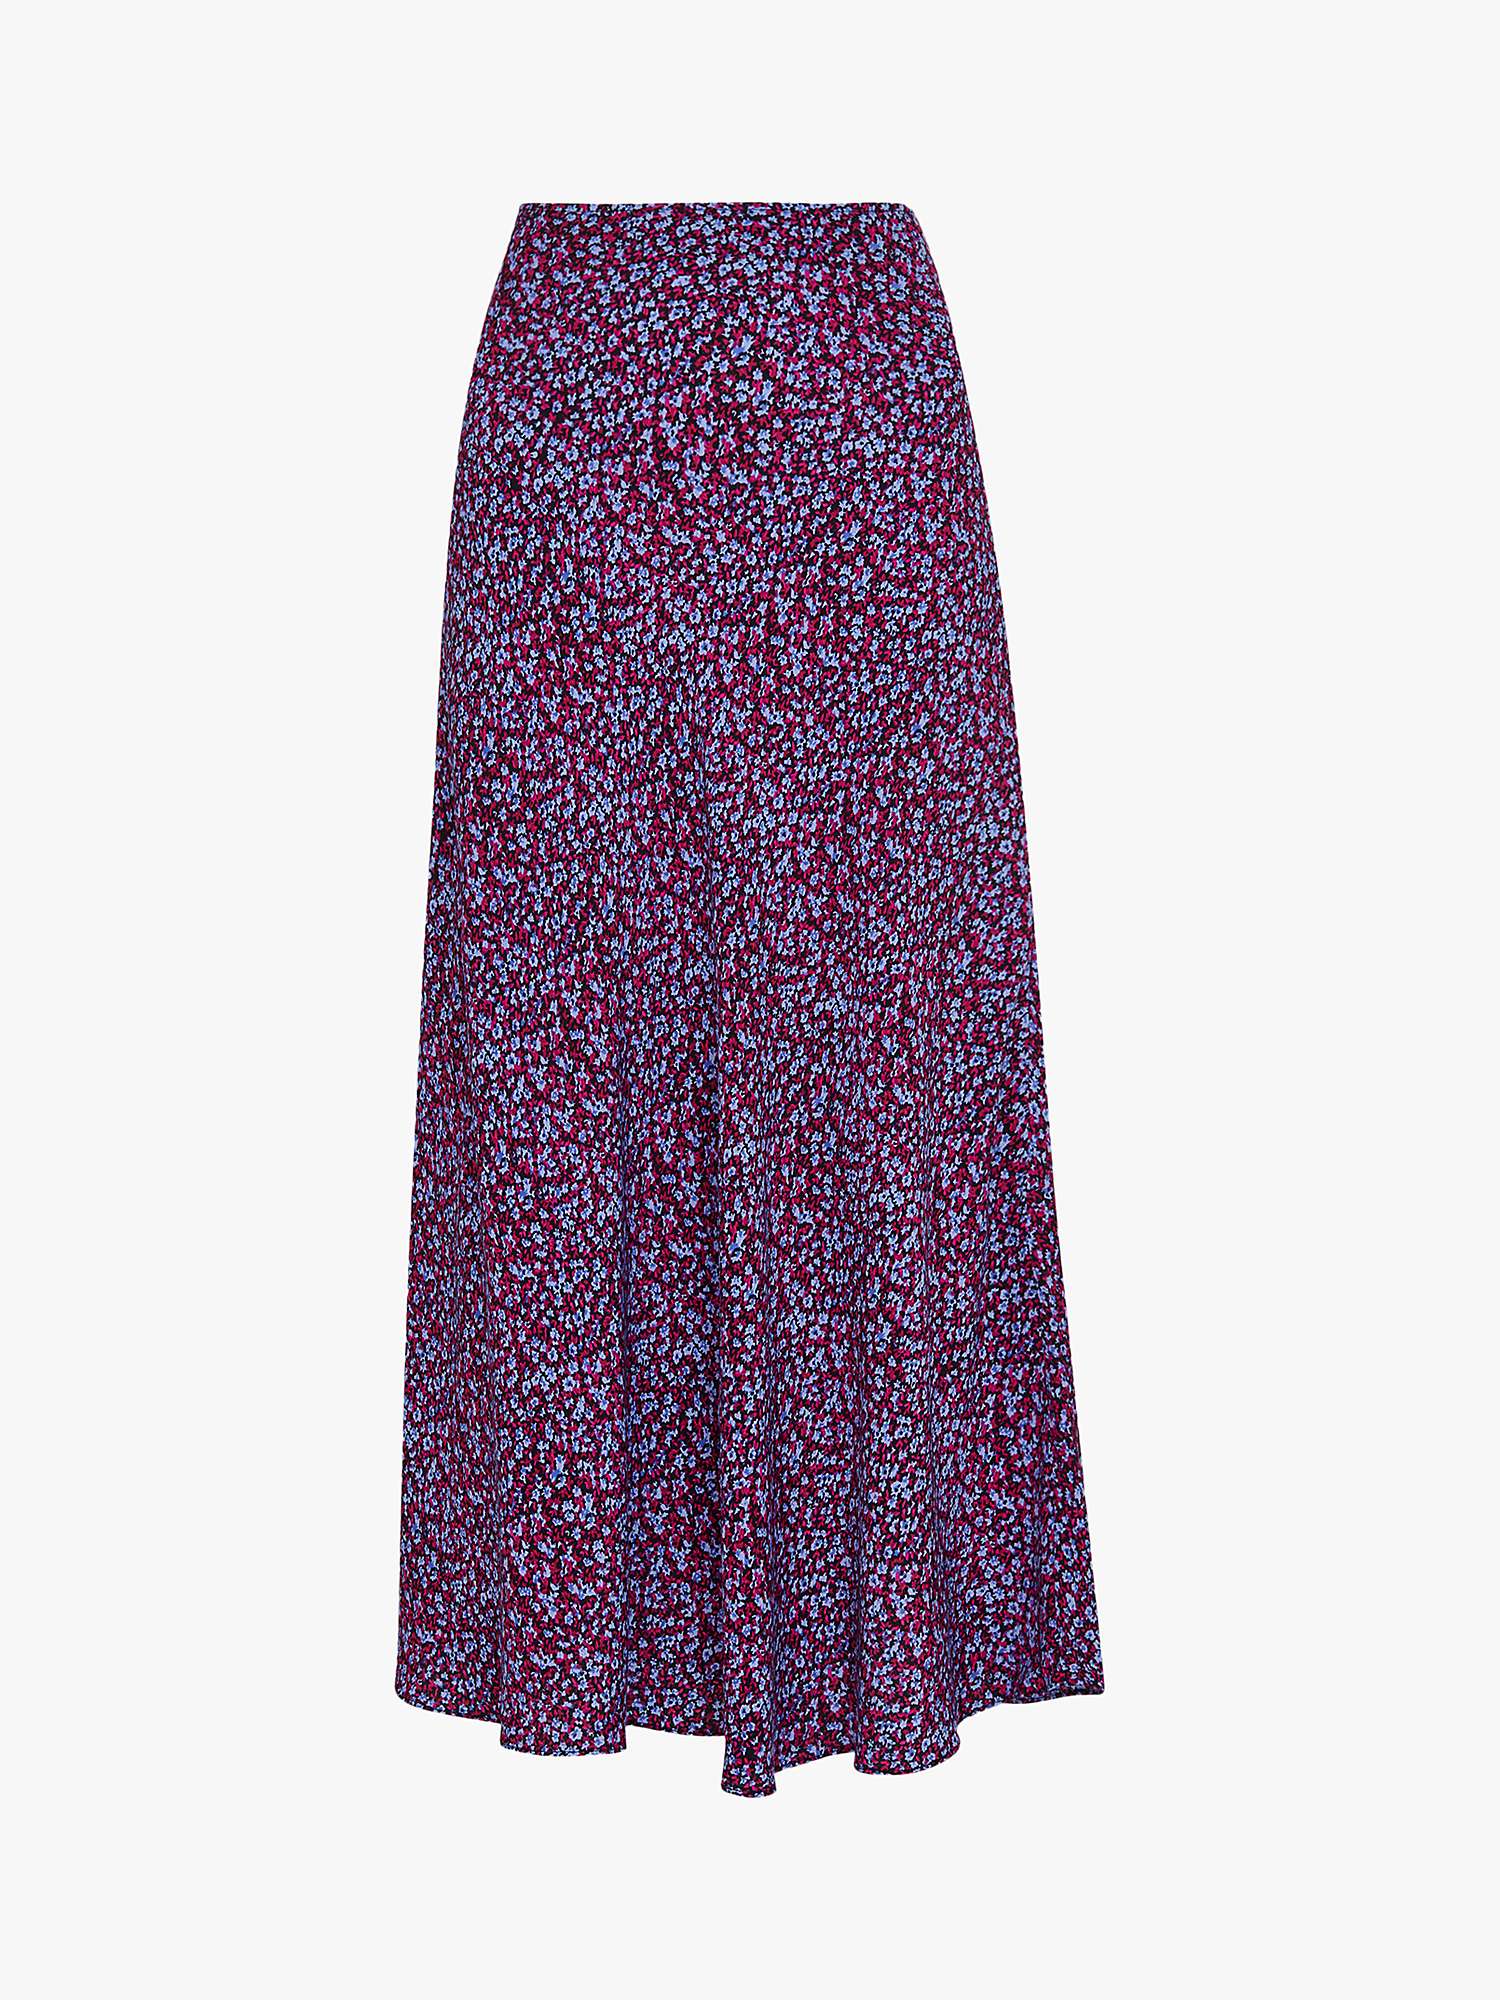 Buy Whistles Floral Garden Bias Midi Skirt, Purple/Multi Online at johnlewis.com